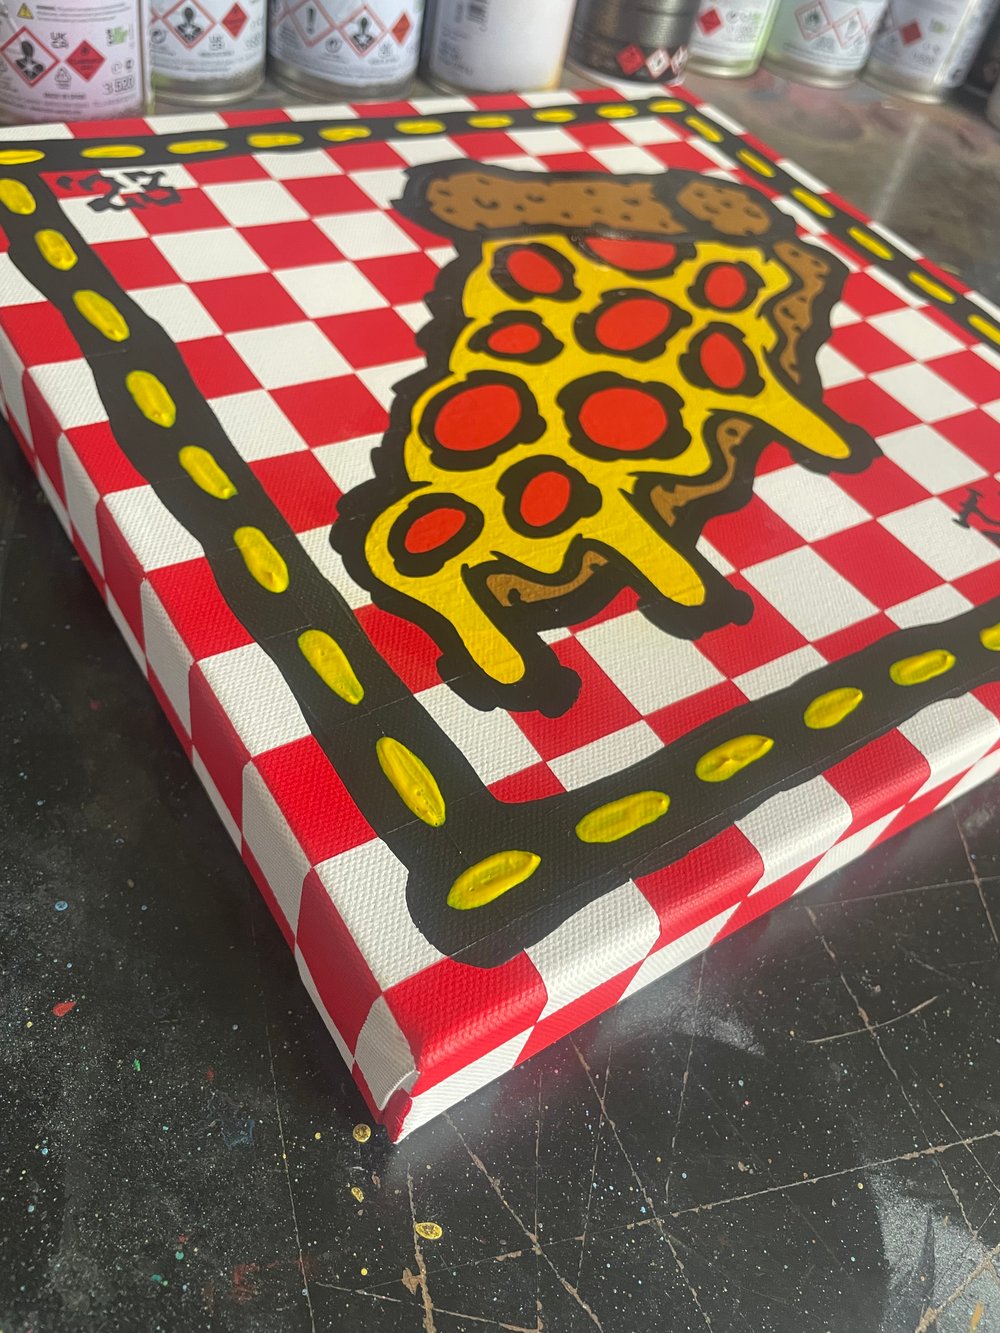 Original Pizza Slice Painting!